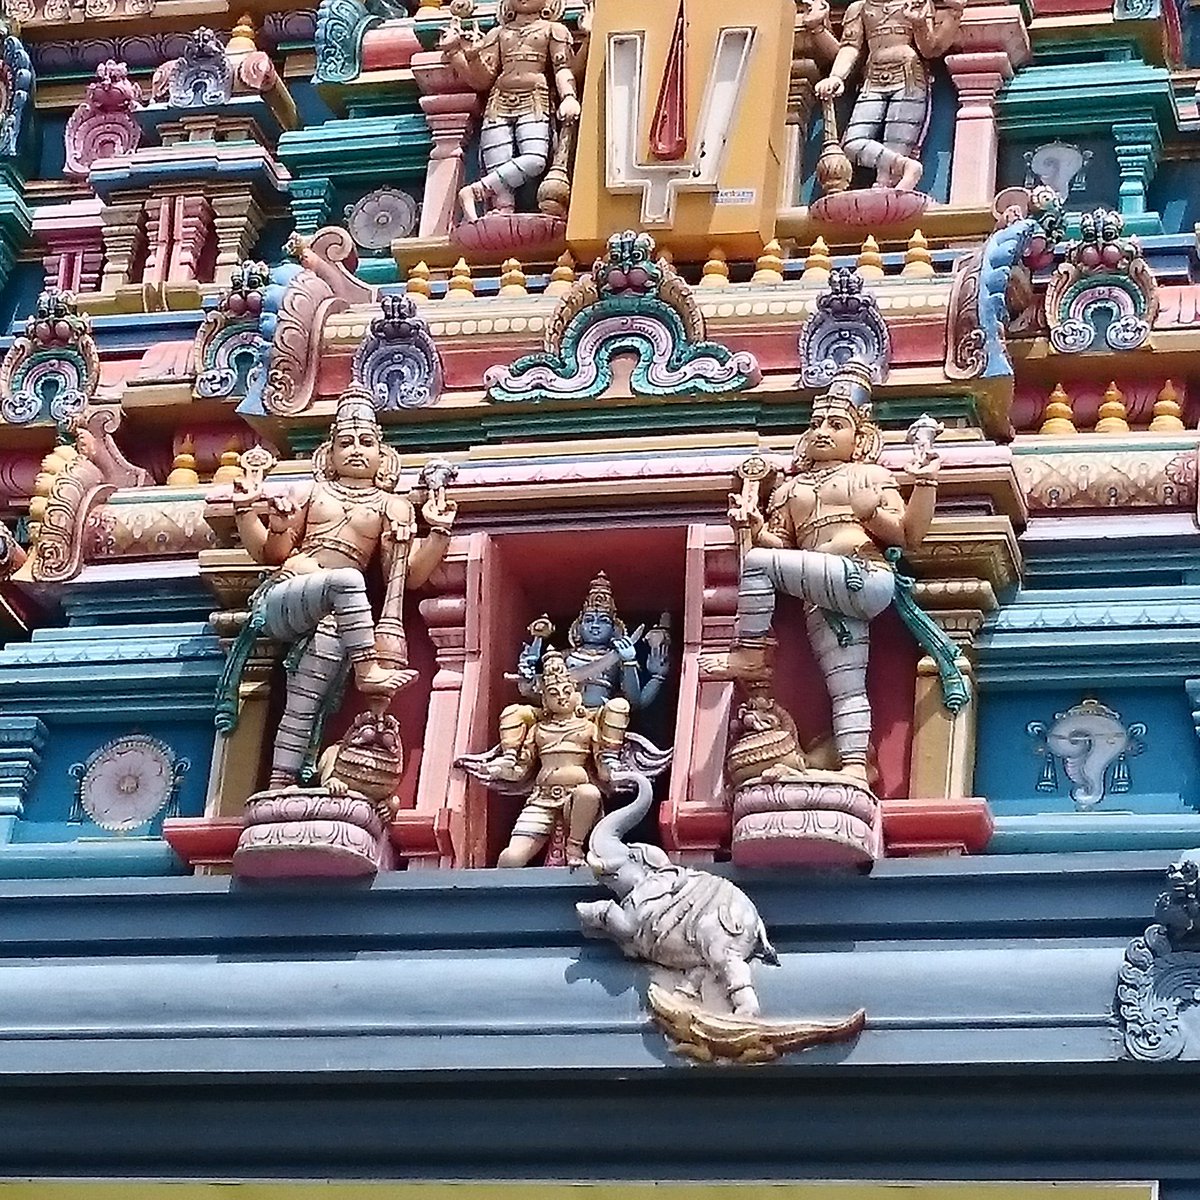 ग for गजेन्द्र मोक्ष/ Gajendra Moksham.  Pic 3. Graphic representation of the story, and pic 4. Stucco on gopuram , both from the Athalanallur Gajendravaradar temple, near Tirunelveli, Tamilnadu.  #AksharArt  #ArtByTheLetter (3/7)